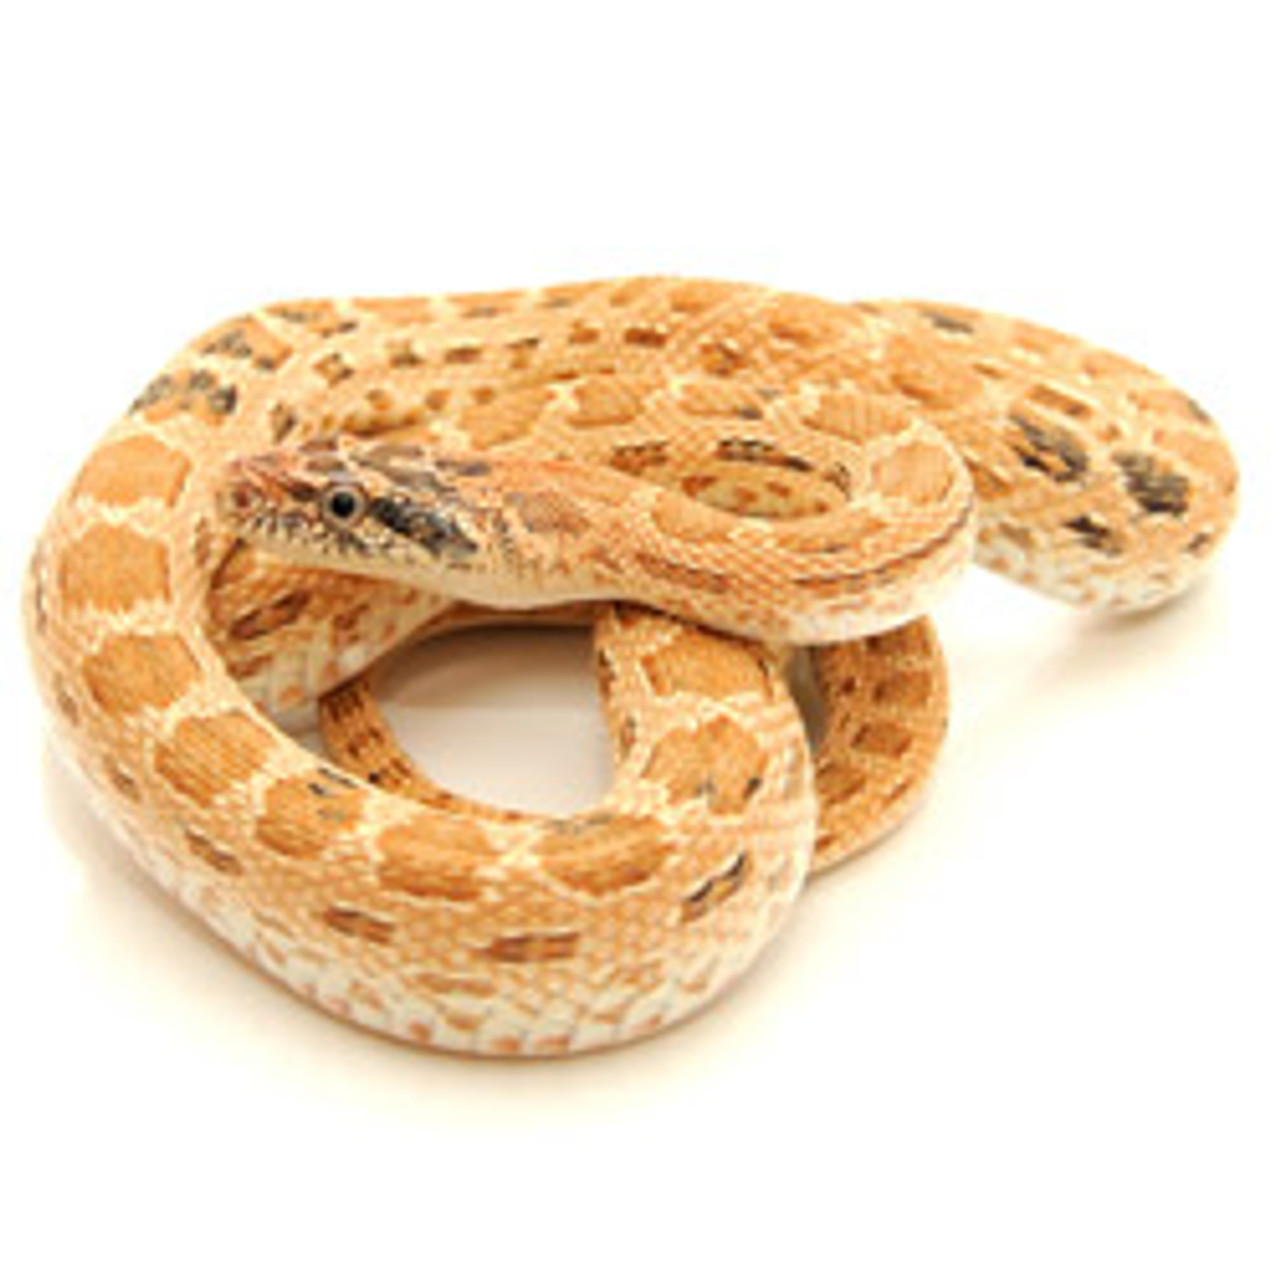 Royal Diadem Rat Snake (Spalerosophis diadema clifford)